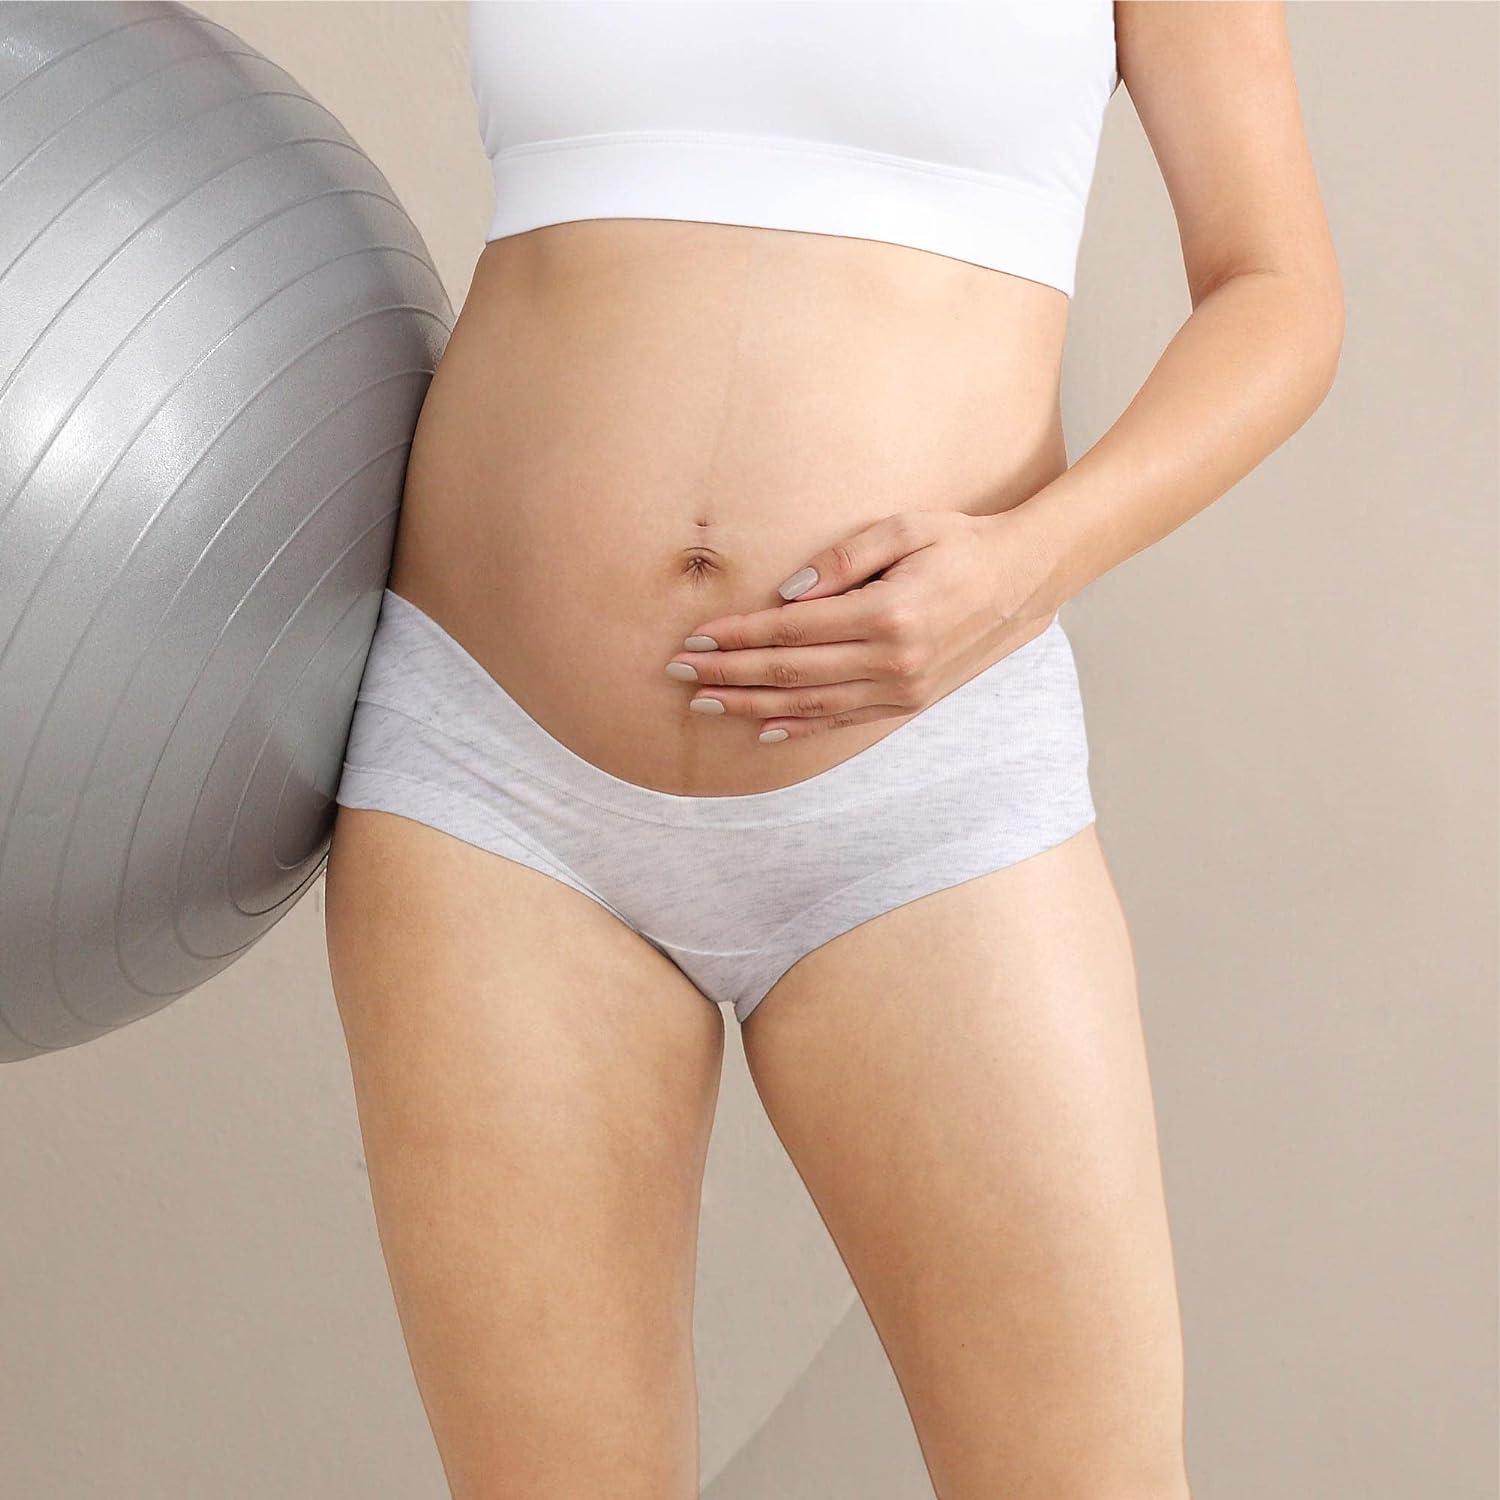 Intimate Portal Maternity Underwear